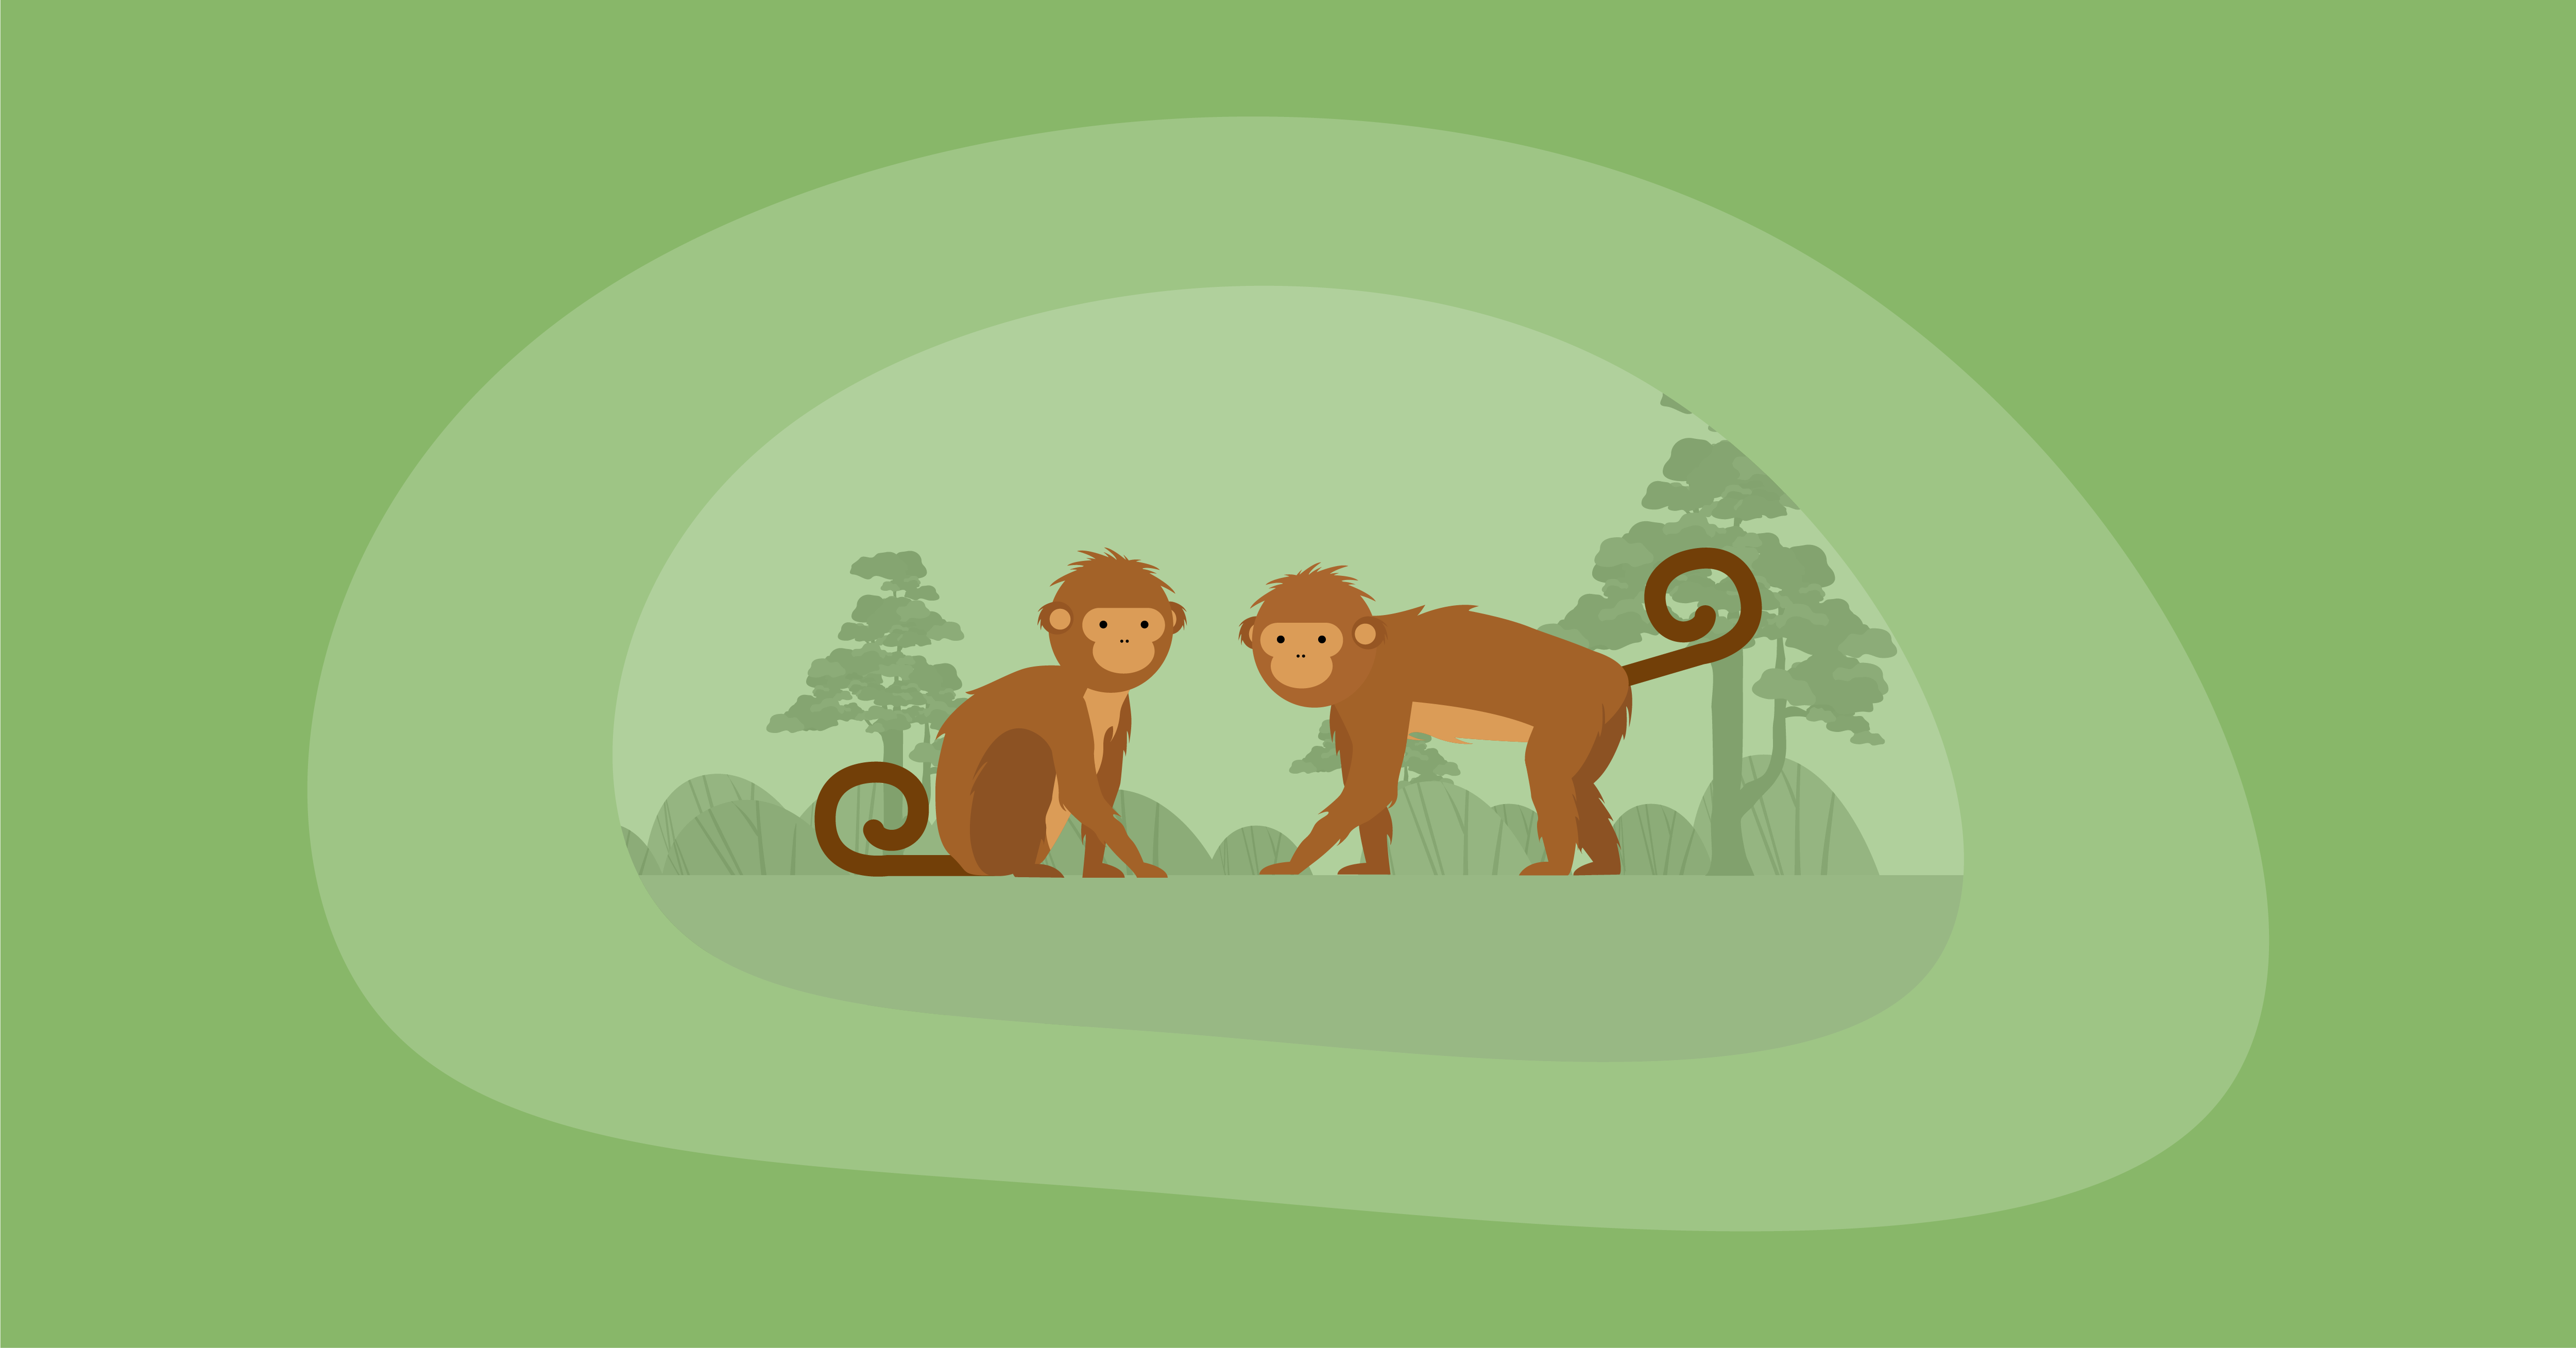 Illustration of monkeys